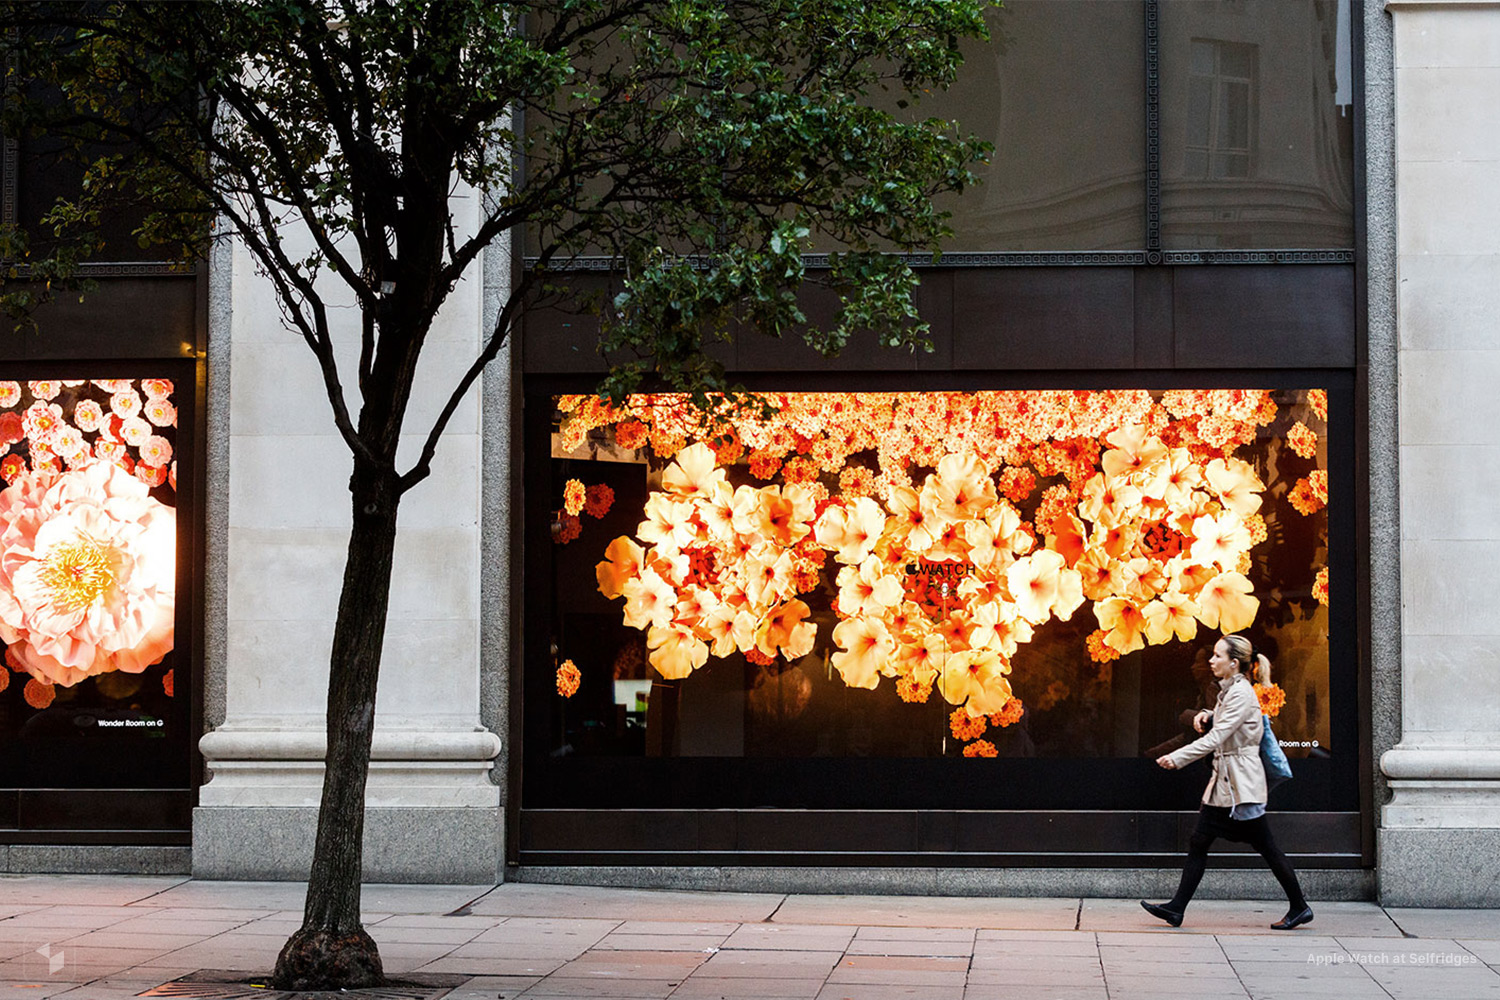 Apple Watch at Selfridges in London: Flowers